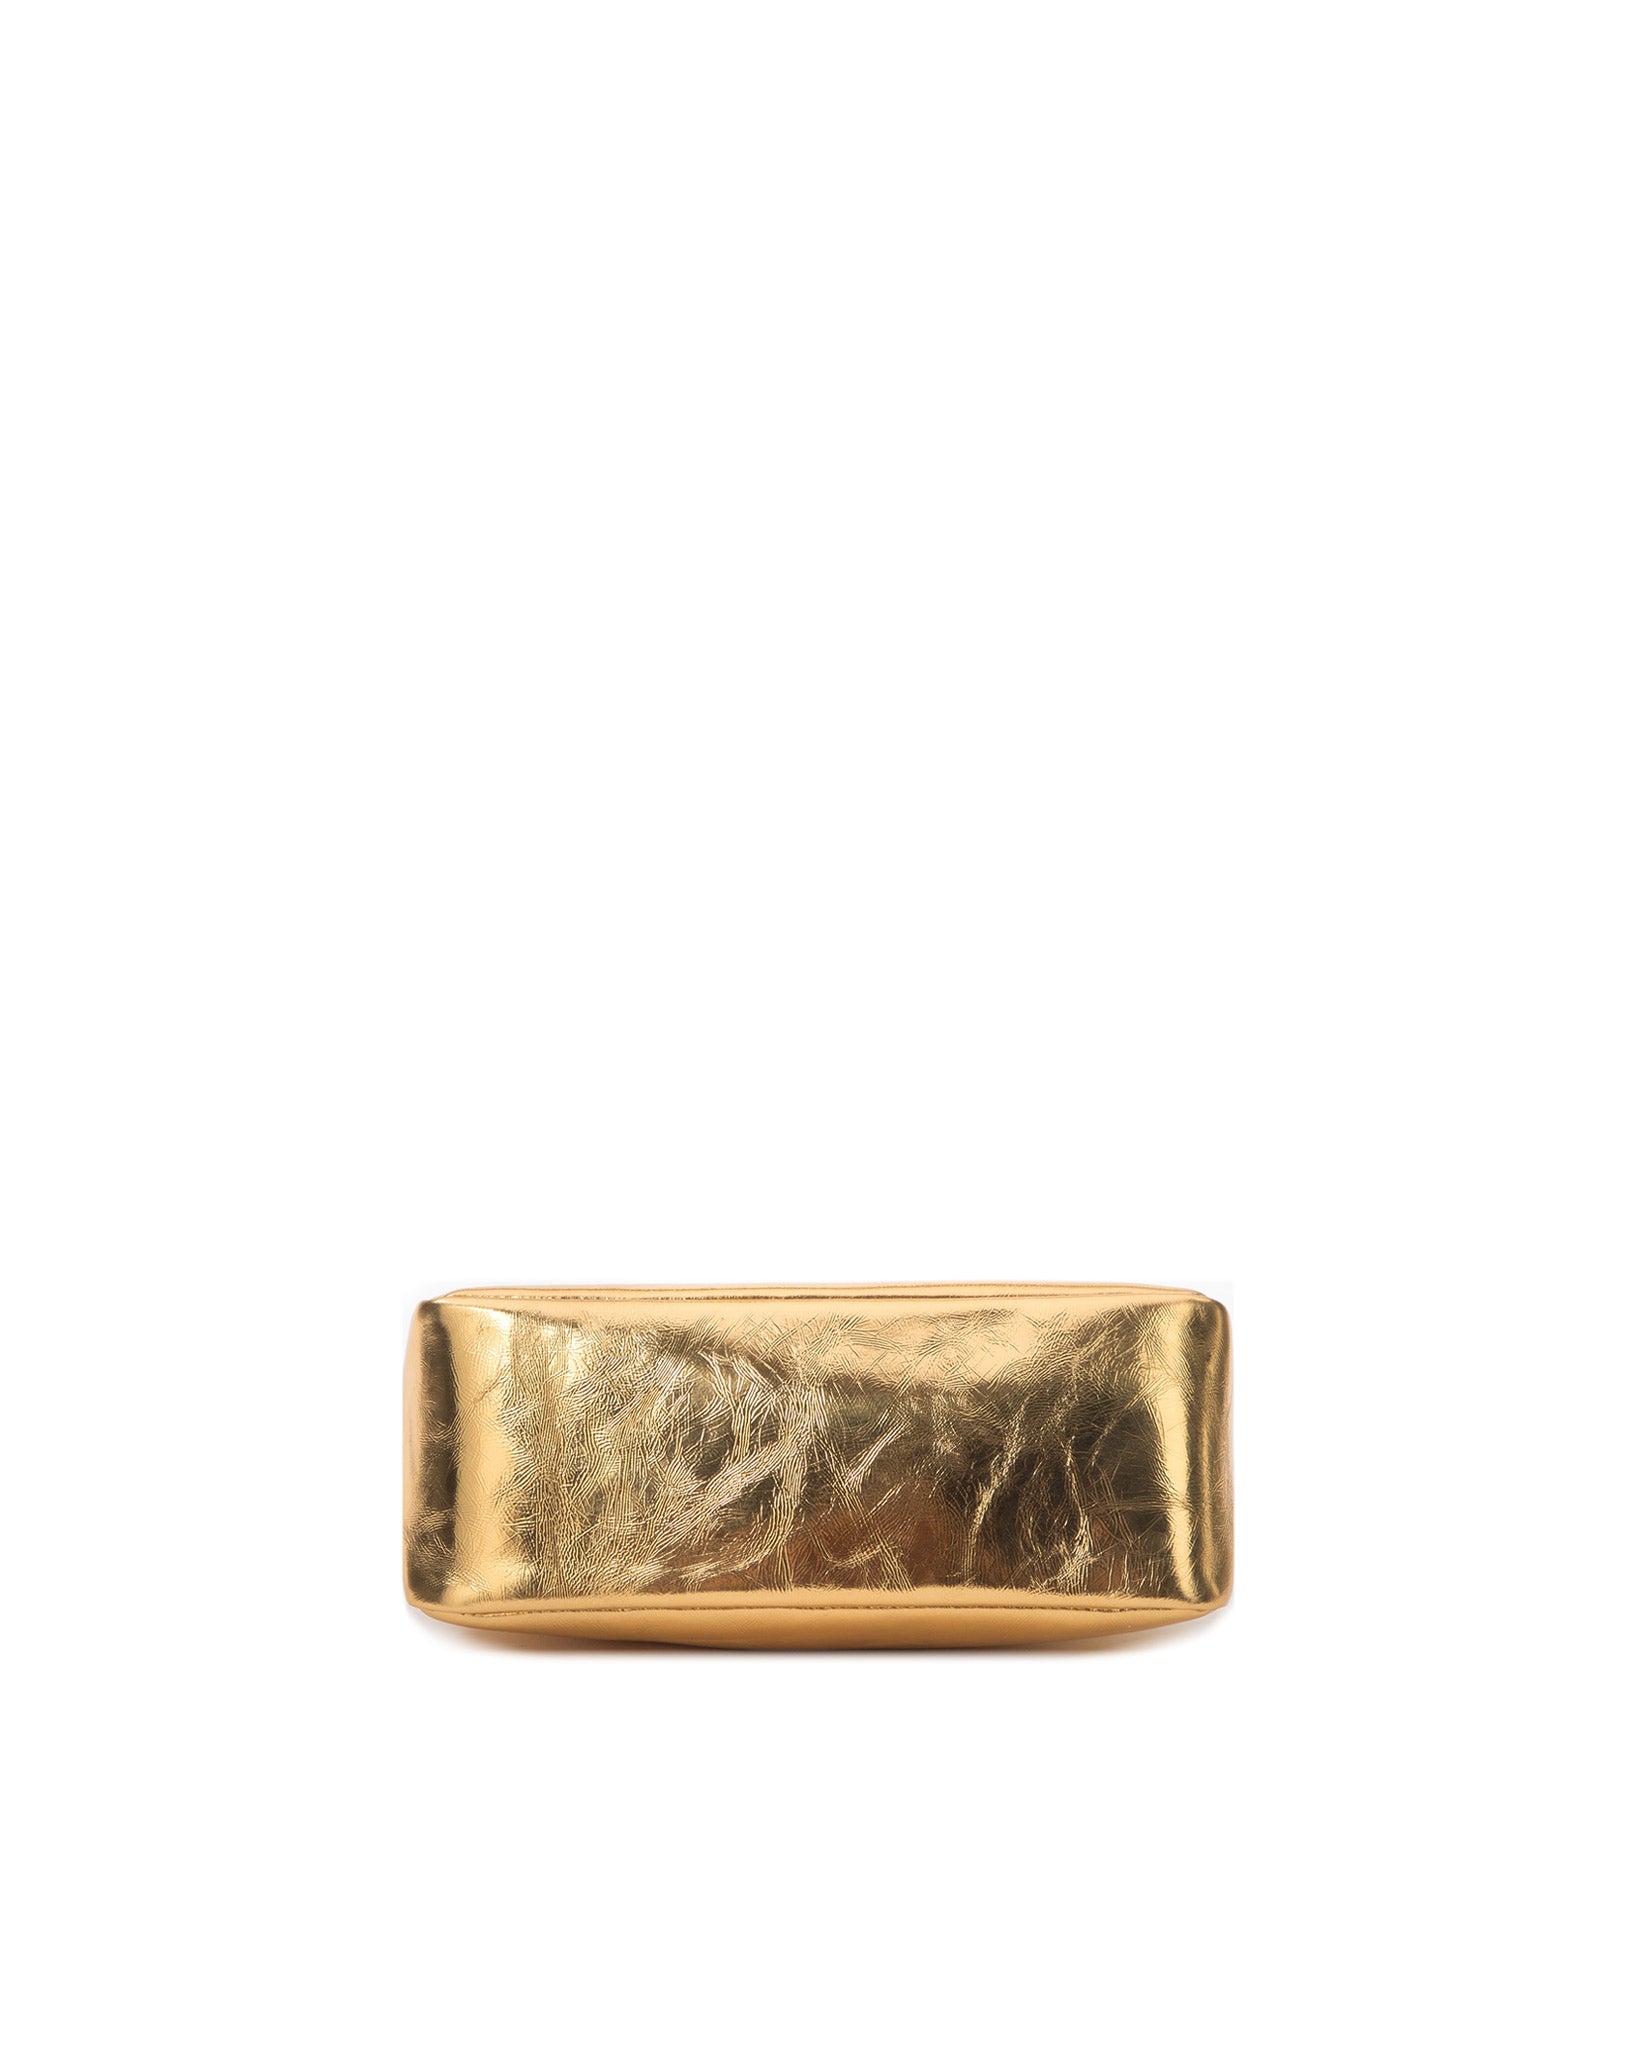 Brandon Blackwood New York - Cortni Bag - Cracked Metallic Gold Leather